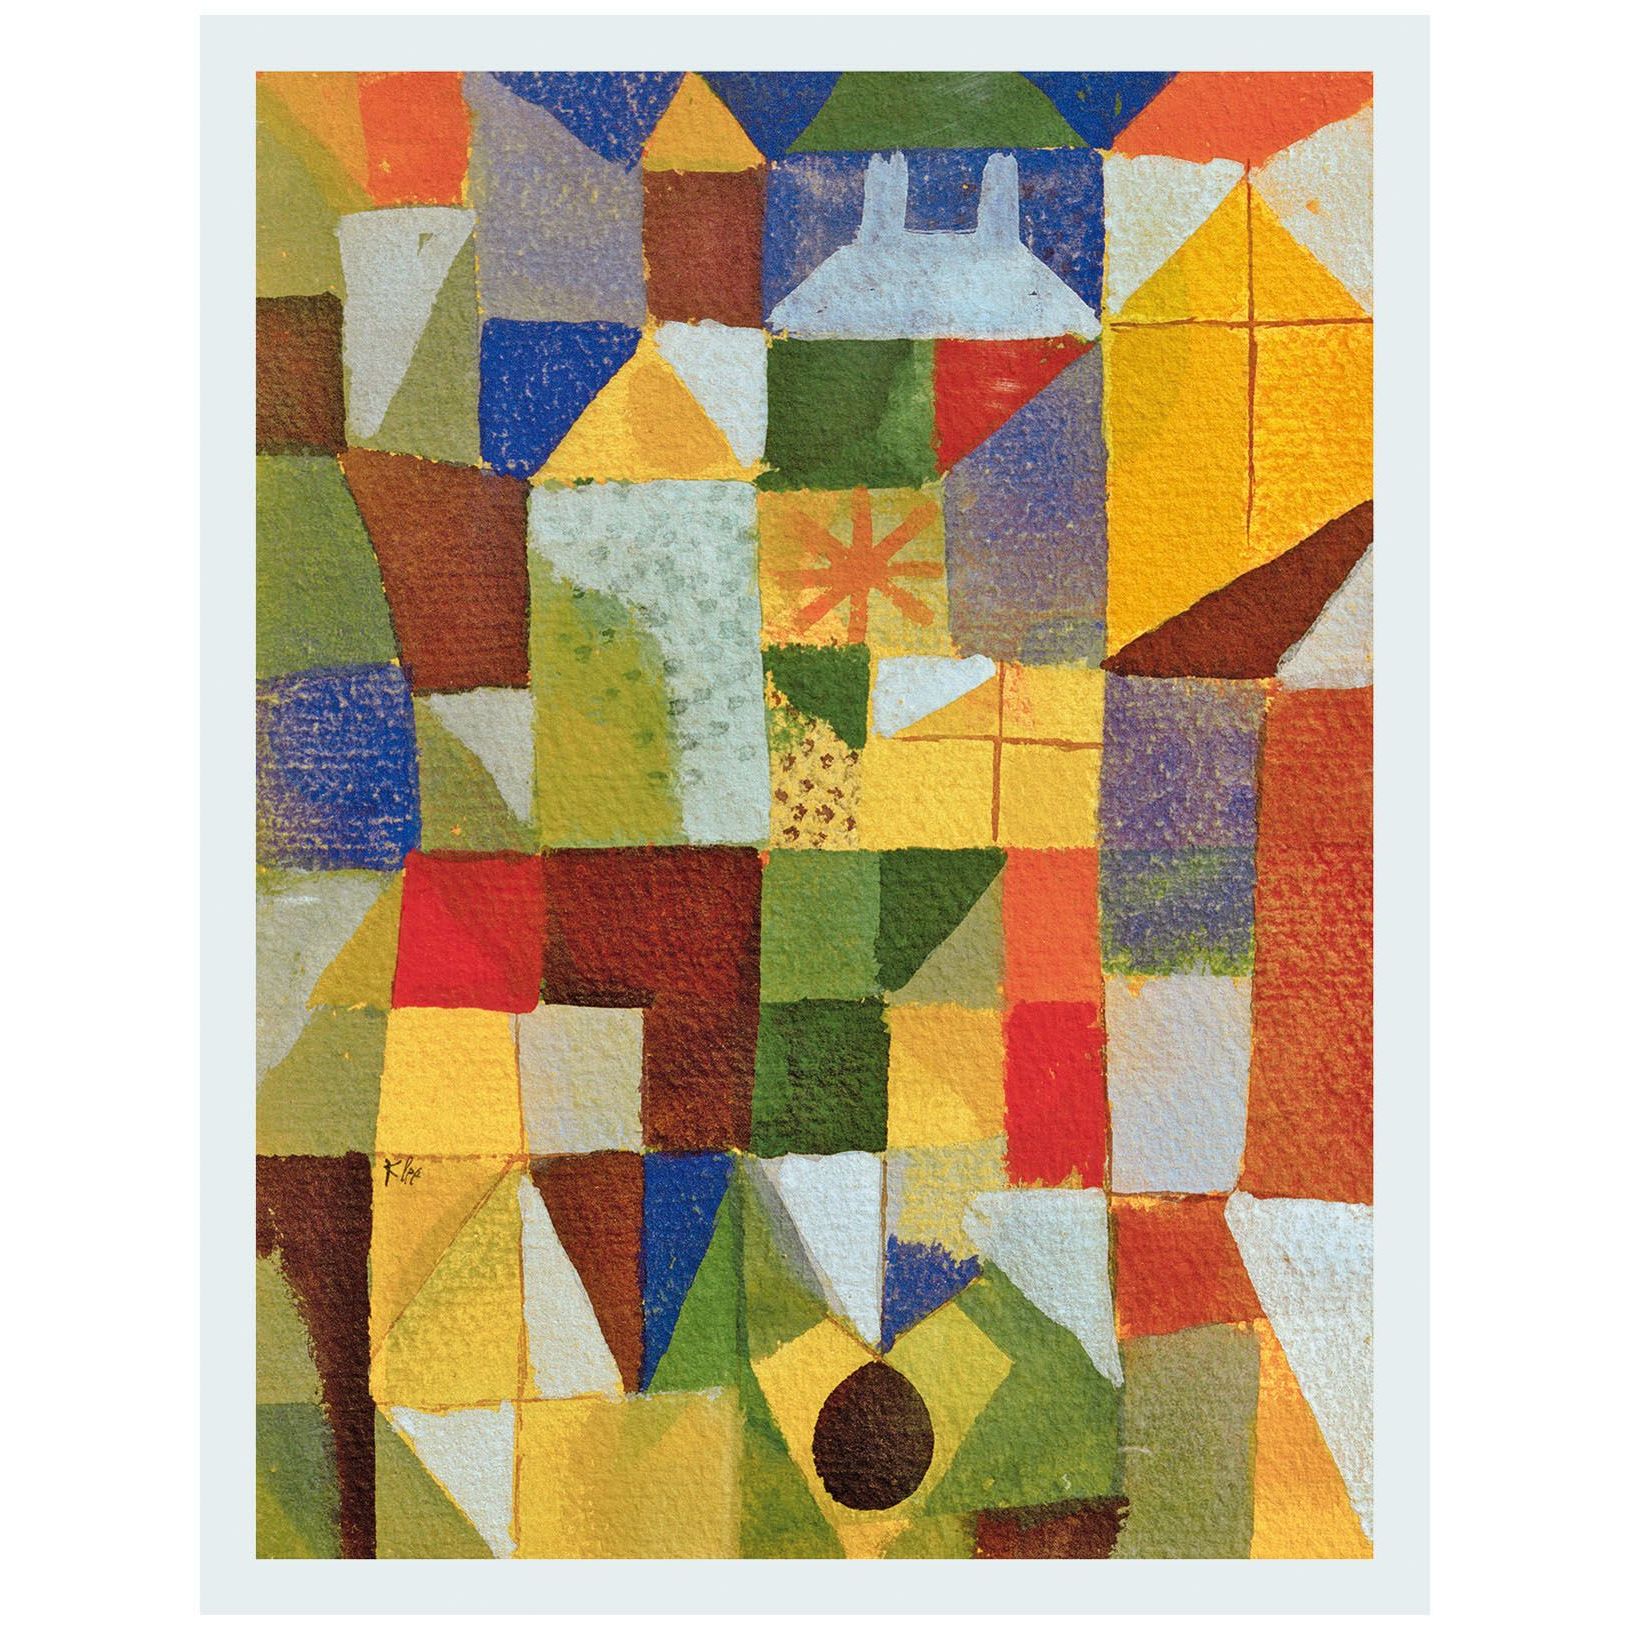 Paul Klee. Städtische Komposition. 1919. Fondation Beyeler, Basel